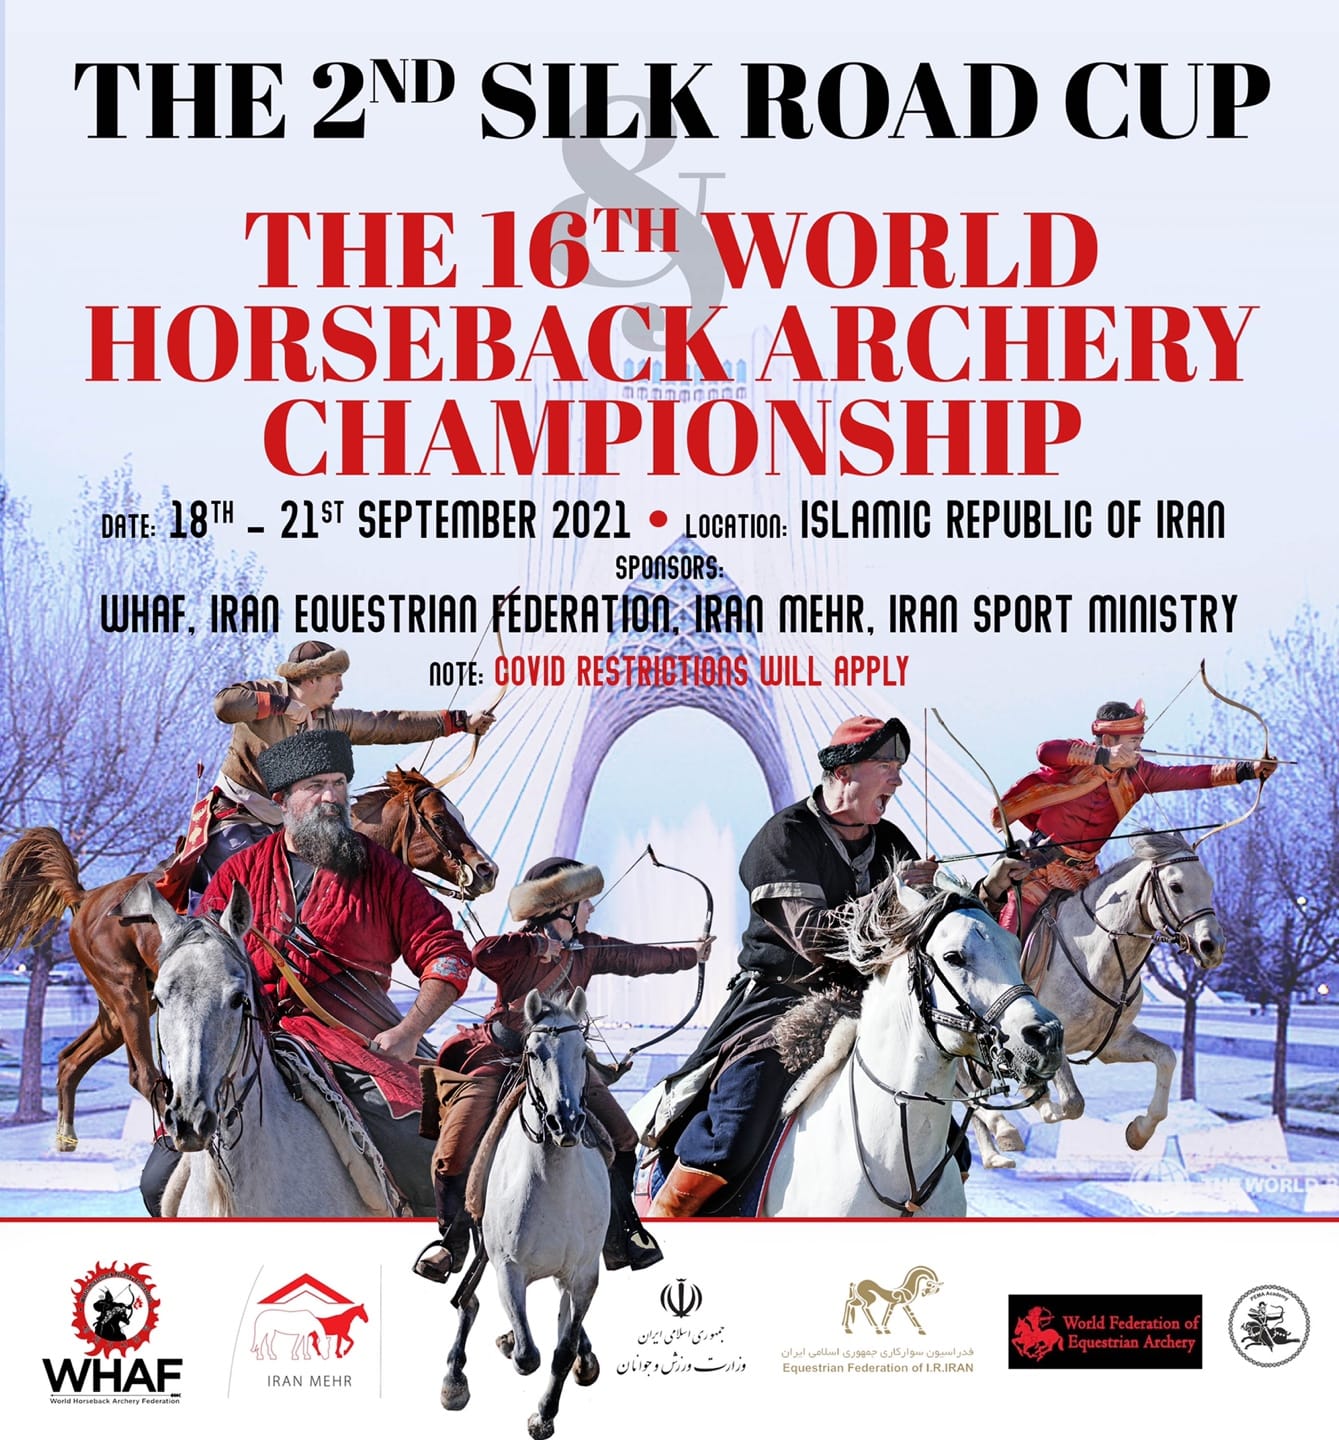 The 16th World Horseback Archery Championship